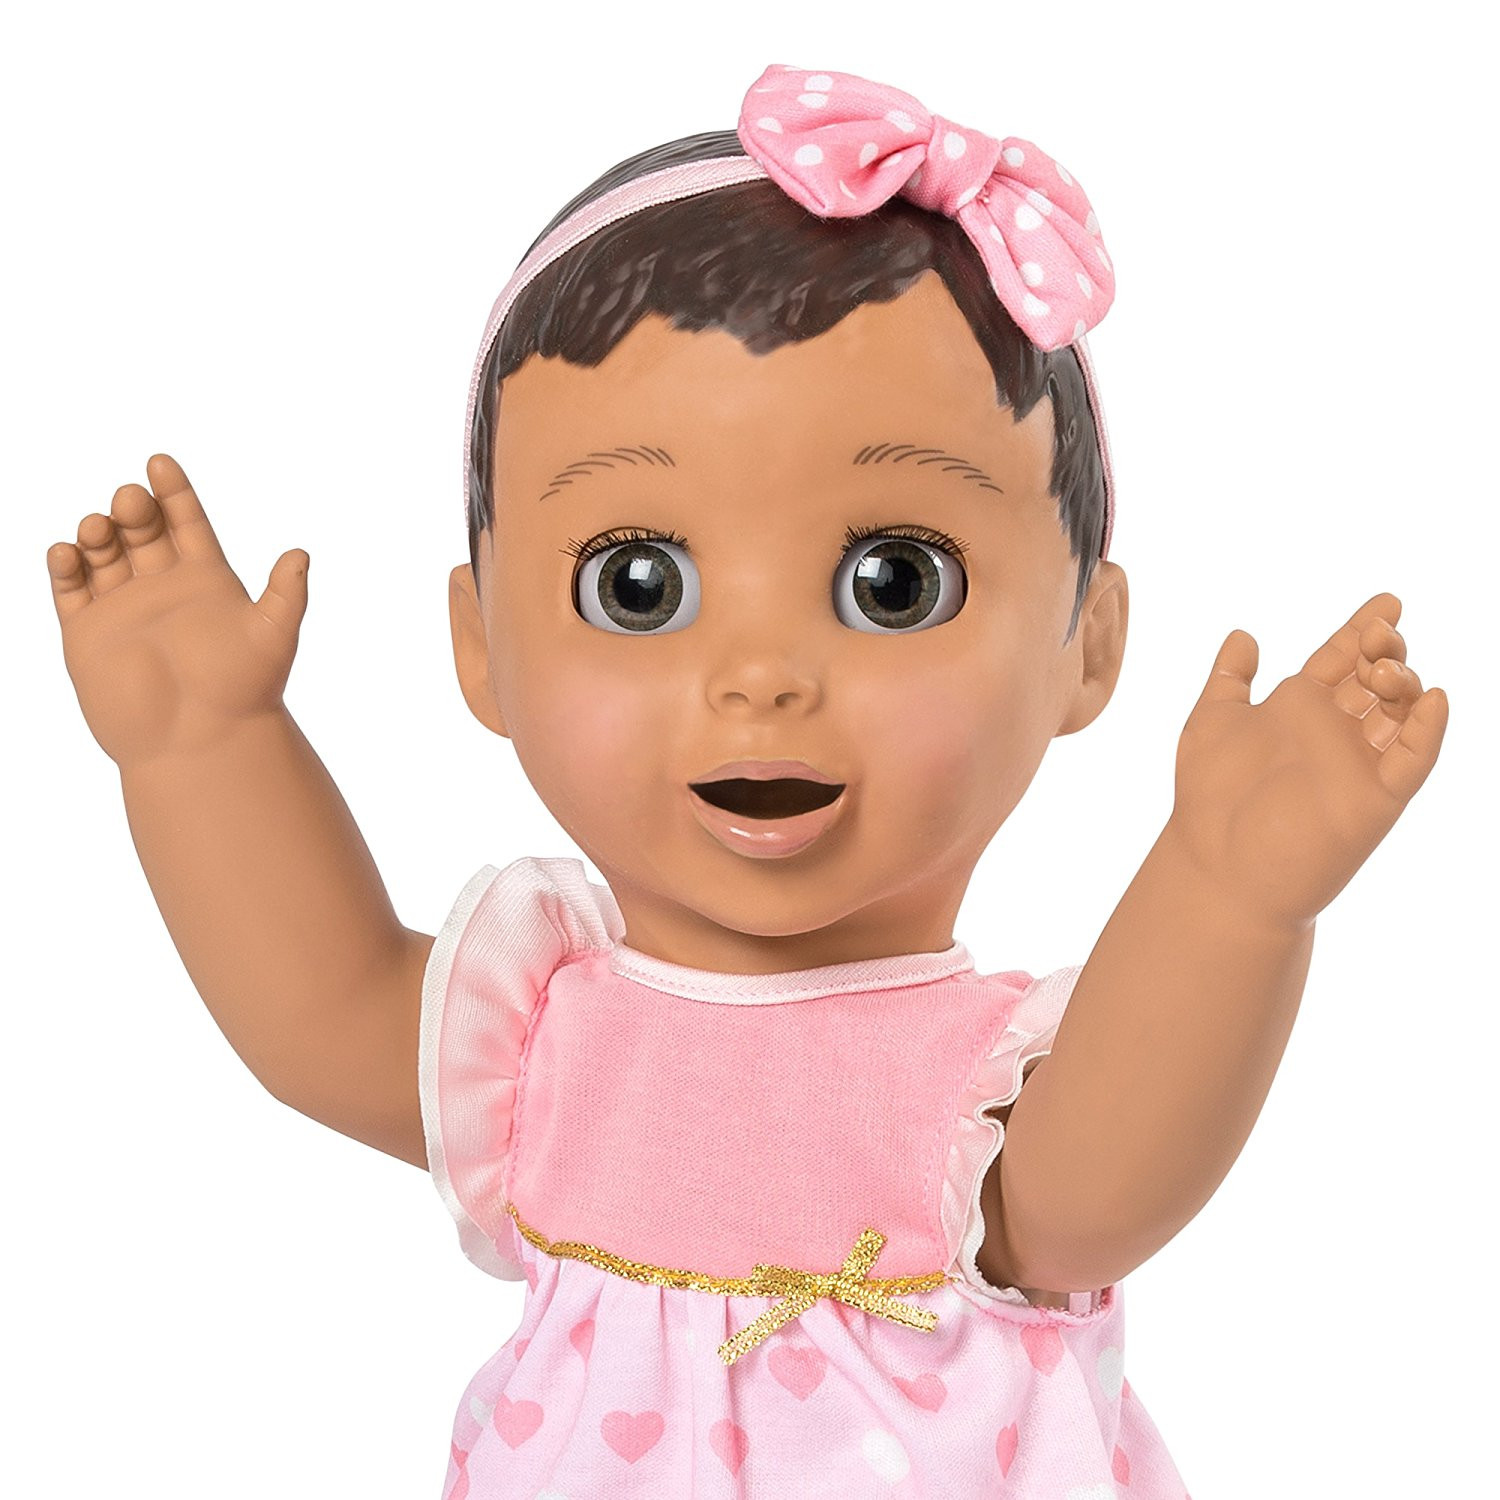 Luvabella Responsive Baby Doll - Brunette Hair
 Luvabella Doll – Brunette Hair – Responsive Baby Doll with